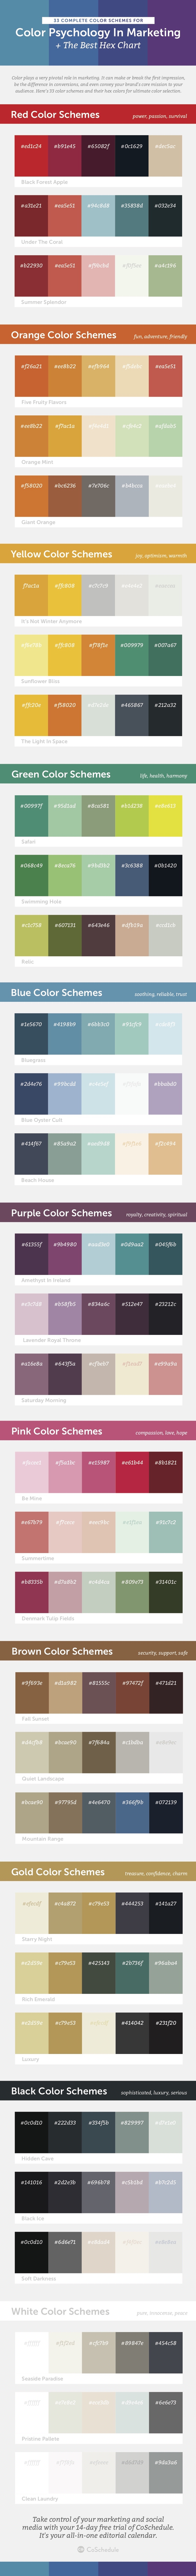 beautiful-color-schemes-marketing-design-psychology-chart-700